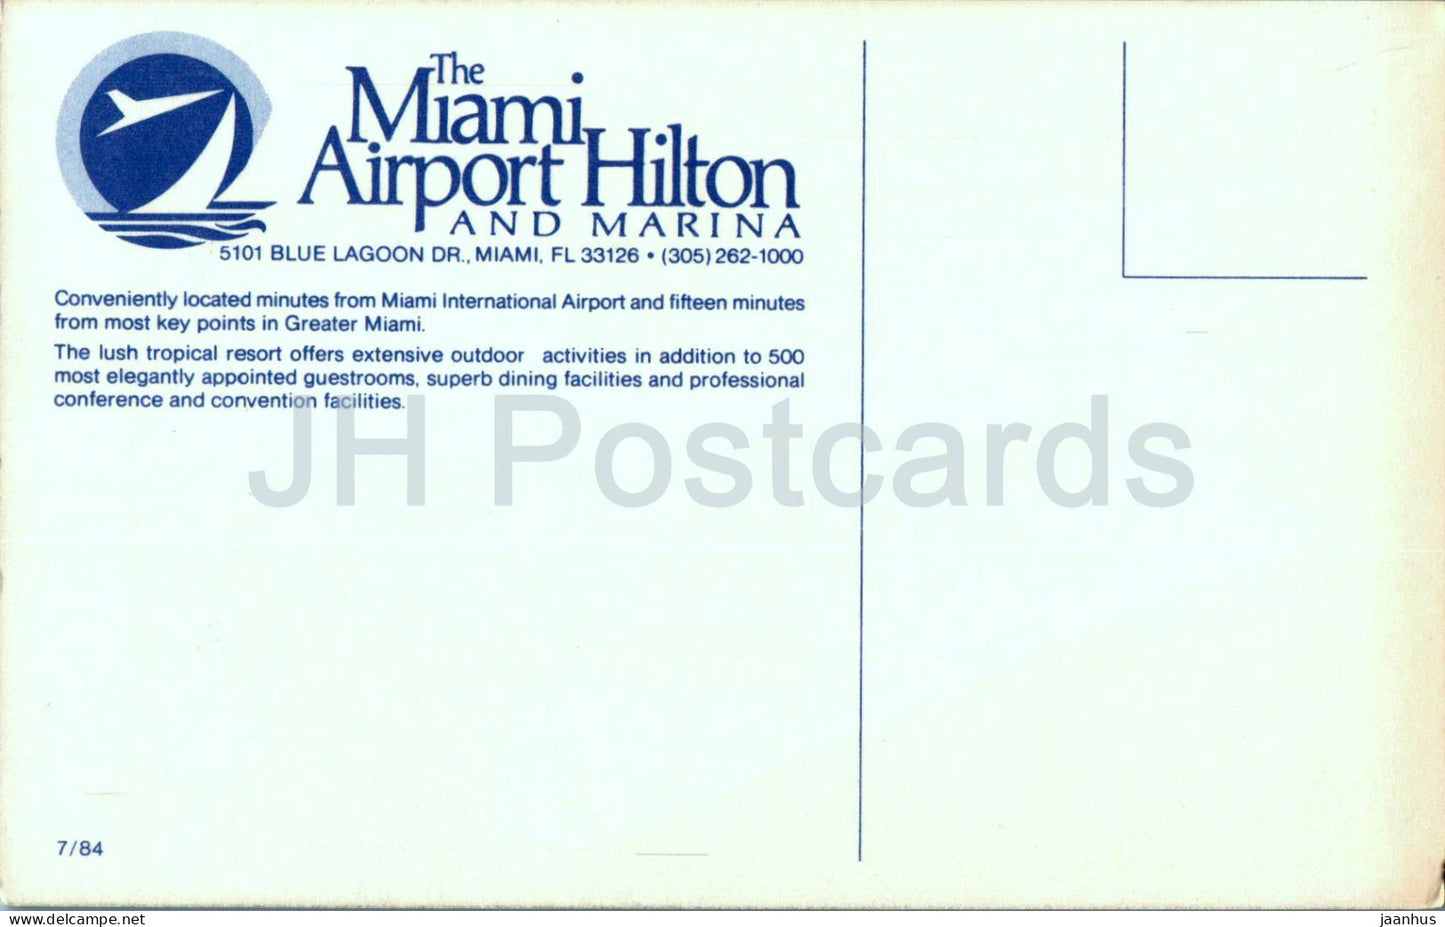 Das Miami Airport Hilton and Marina – 7/84 – USA – unbenutzt 